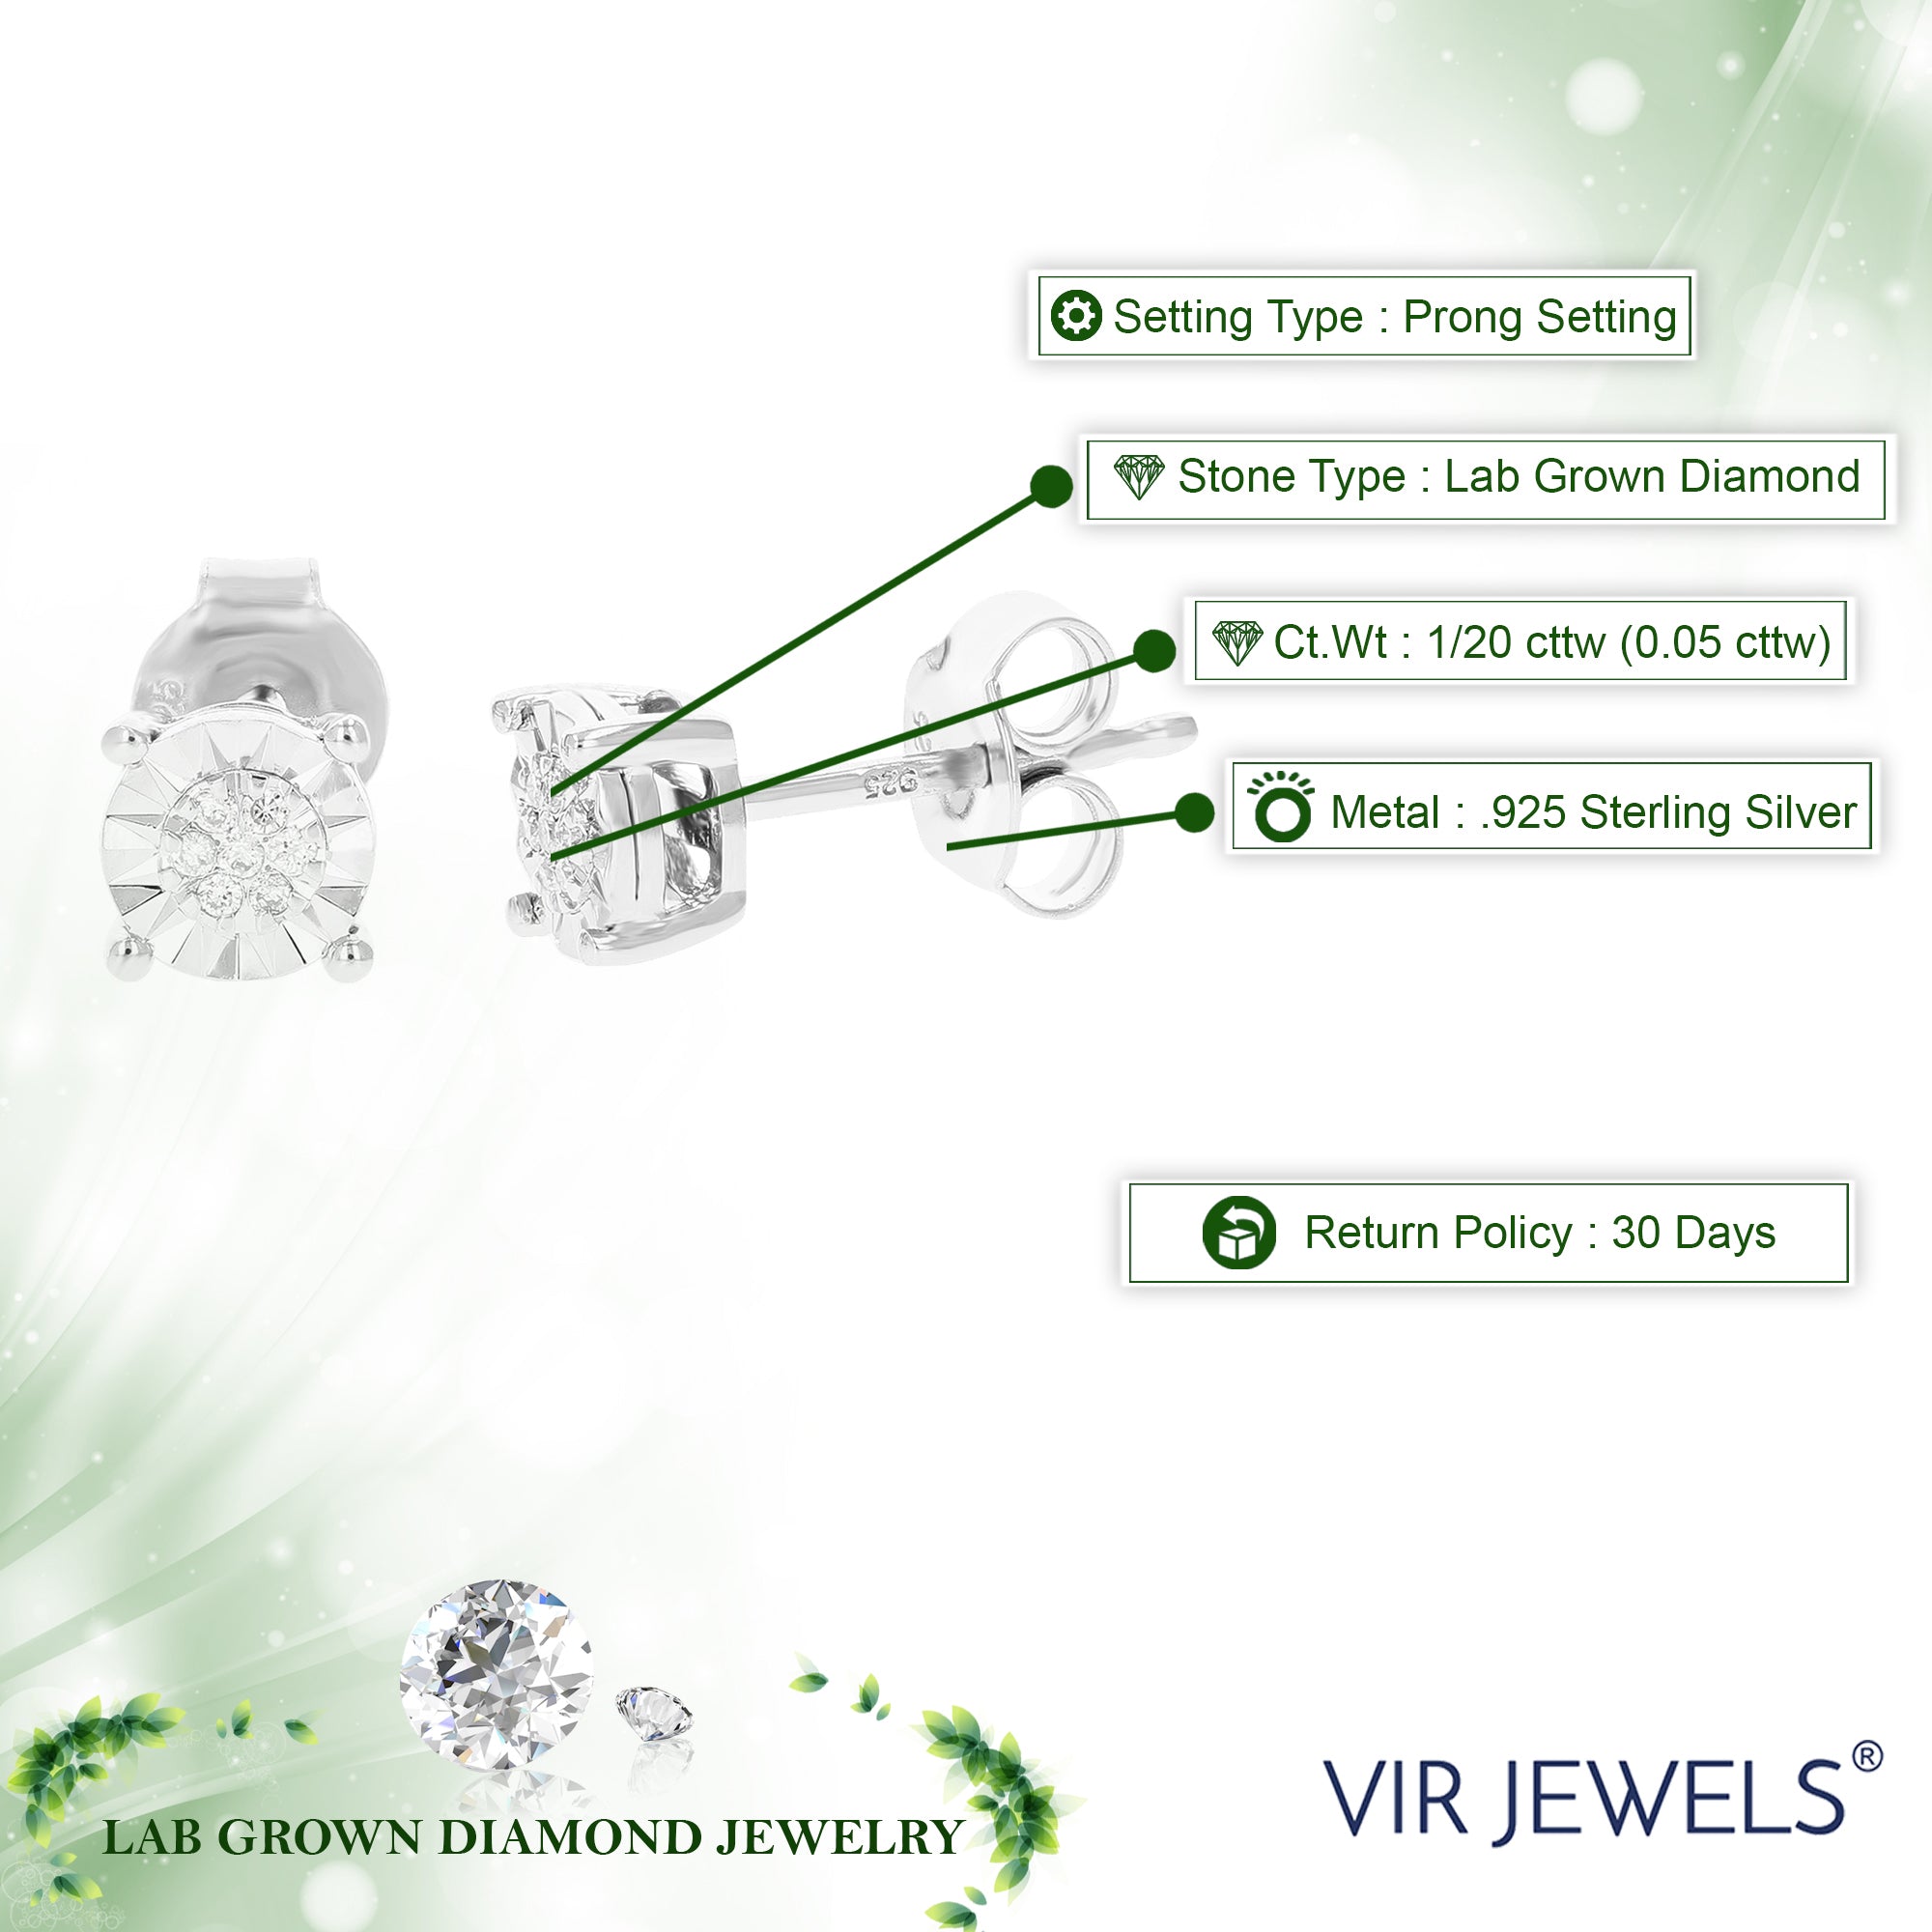 1/20 cttw Stud Earrings for Women, Round Lab Grown Diamond Stud Earrings in .925 Sterling Silver, Prong Setting